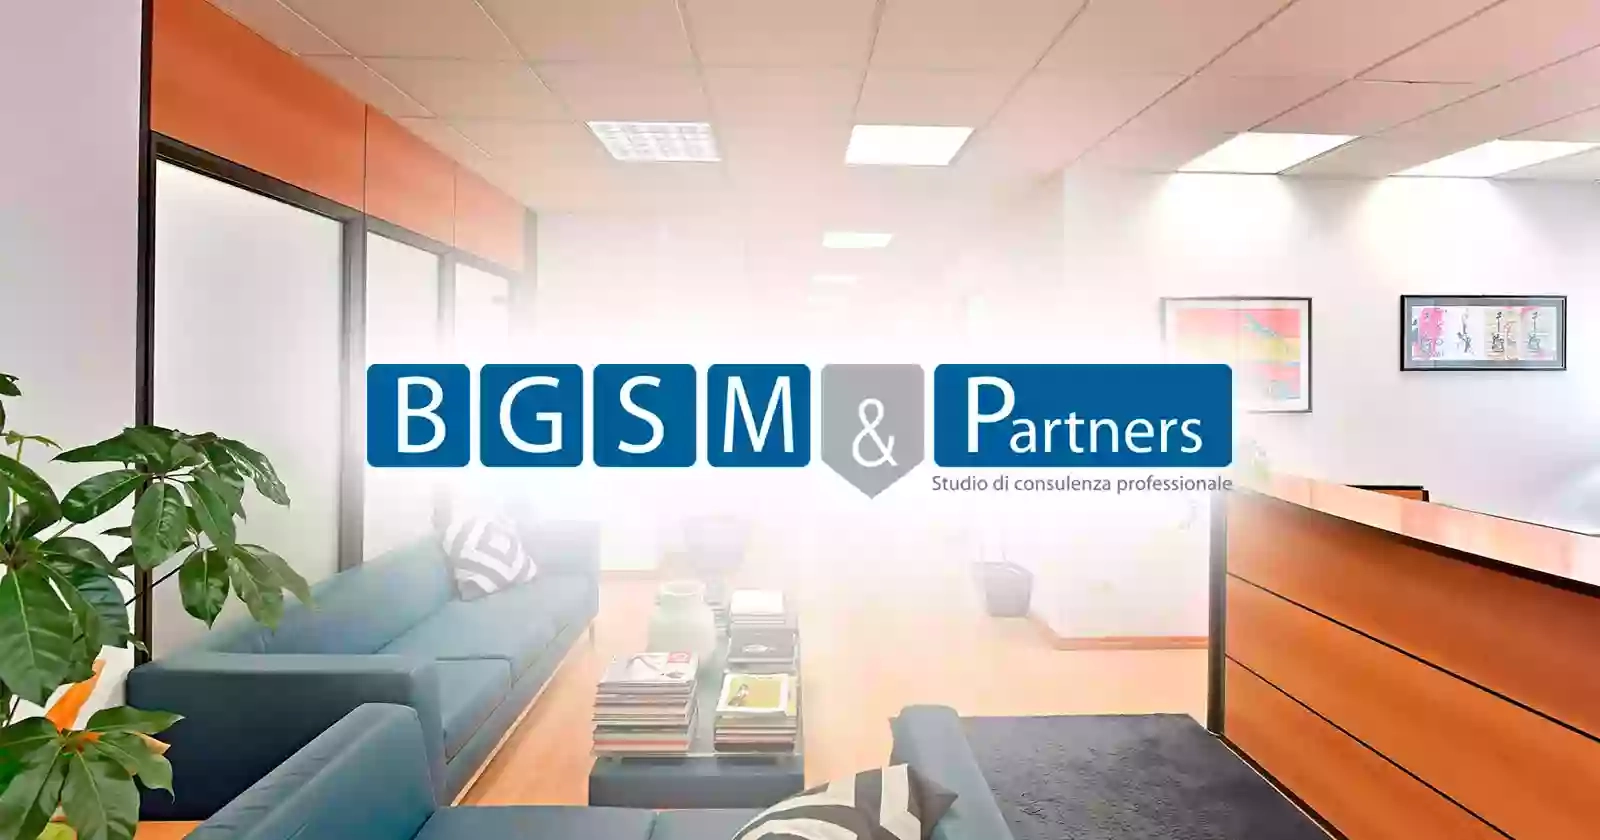 BGSM & Partners